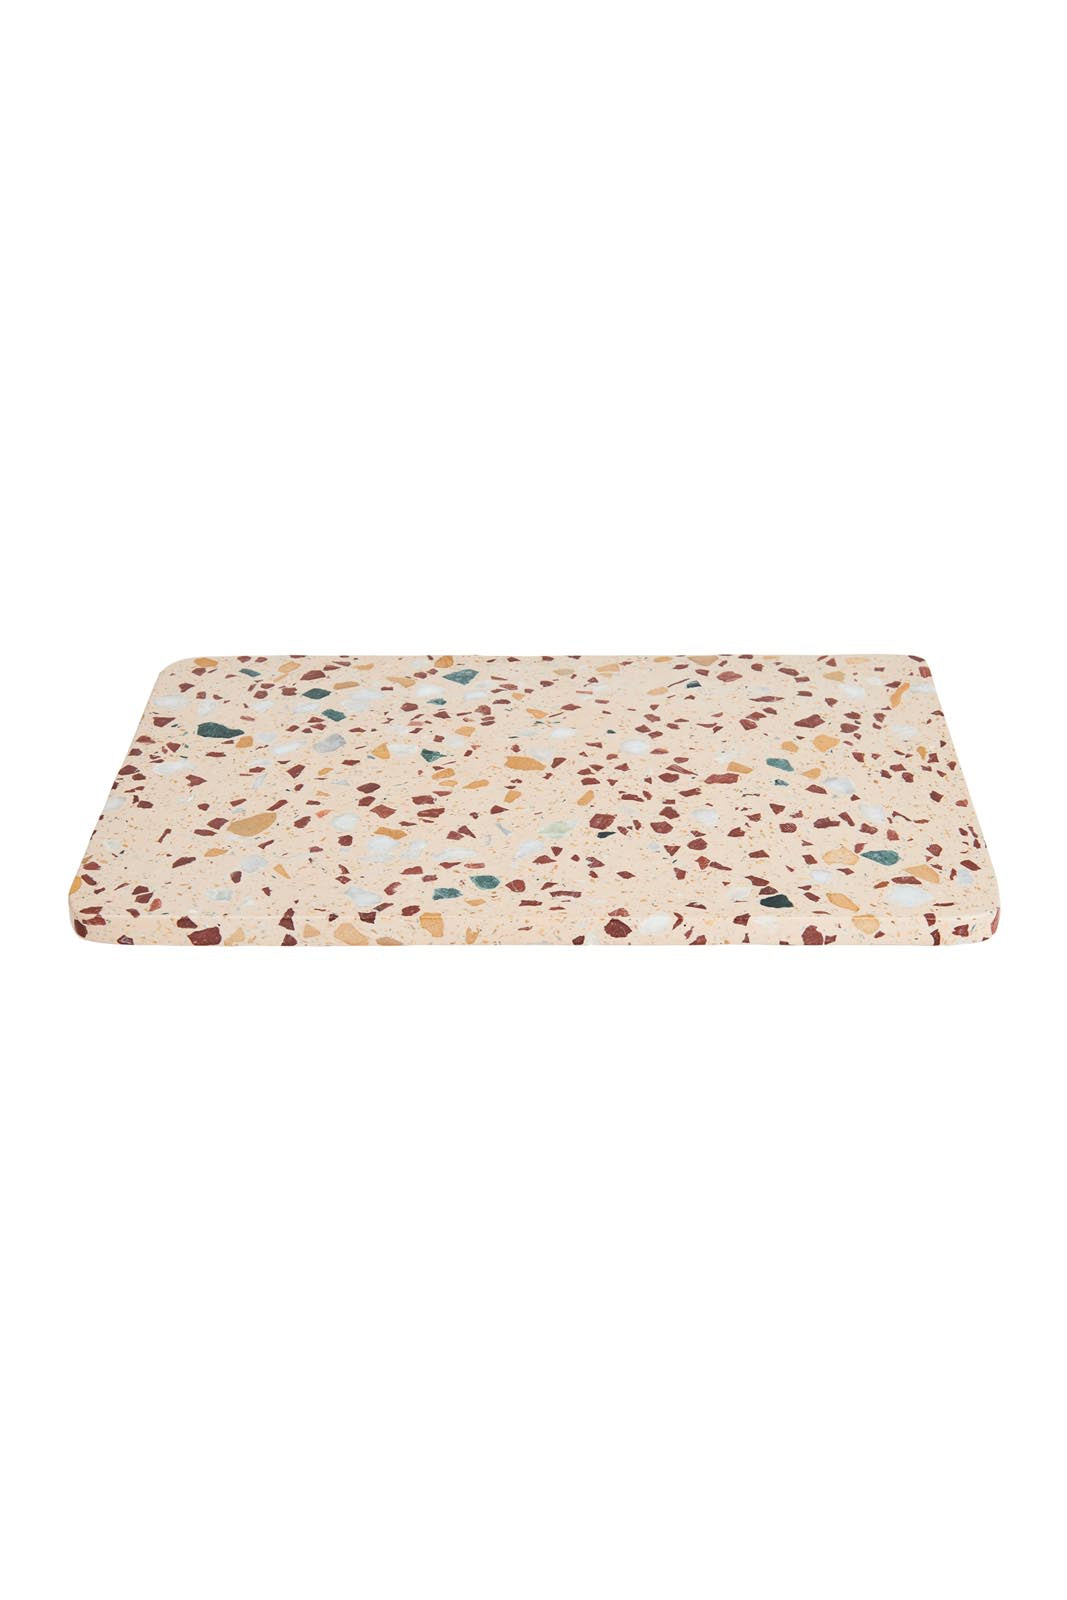 Allure Rectangle Board - Blossom - eb&ive Table Top